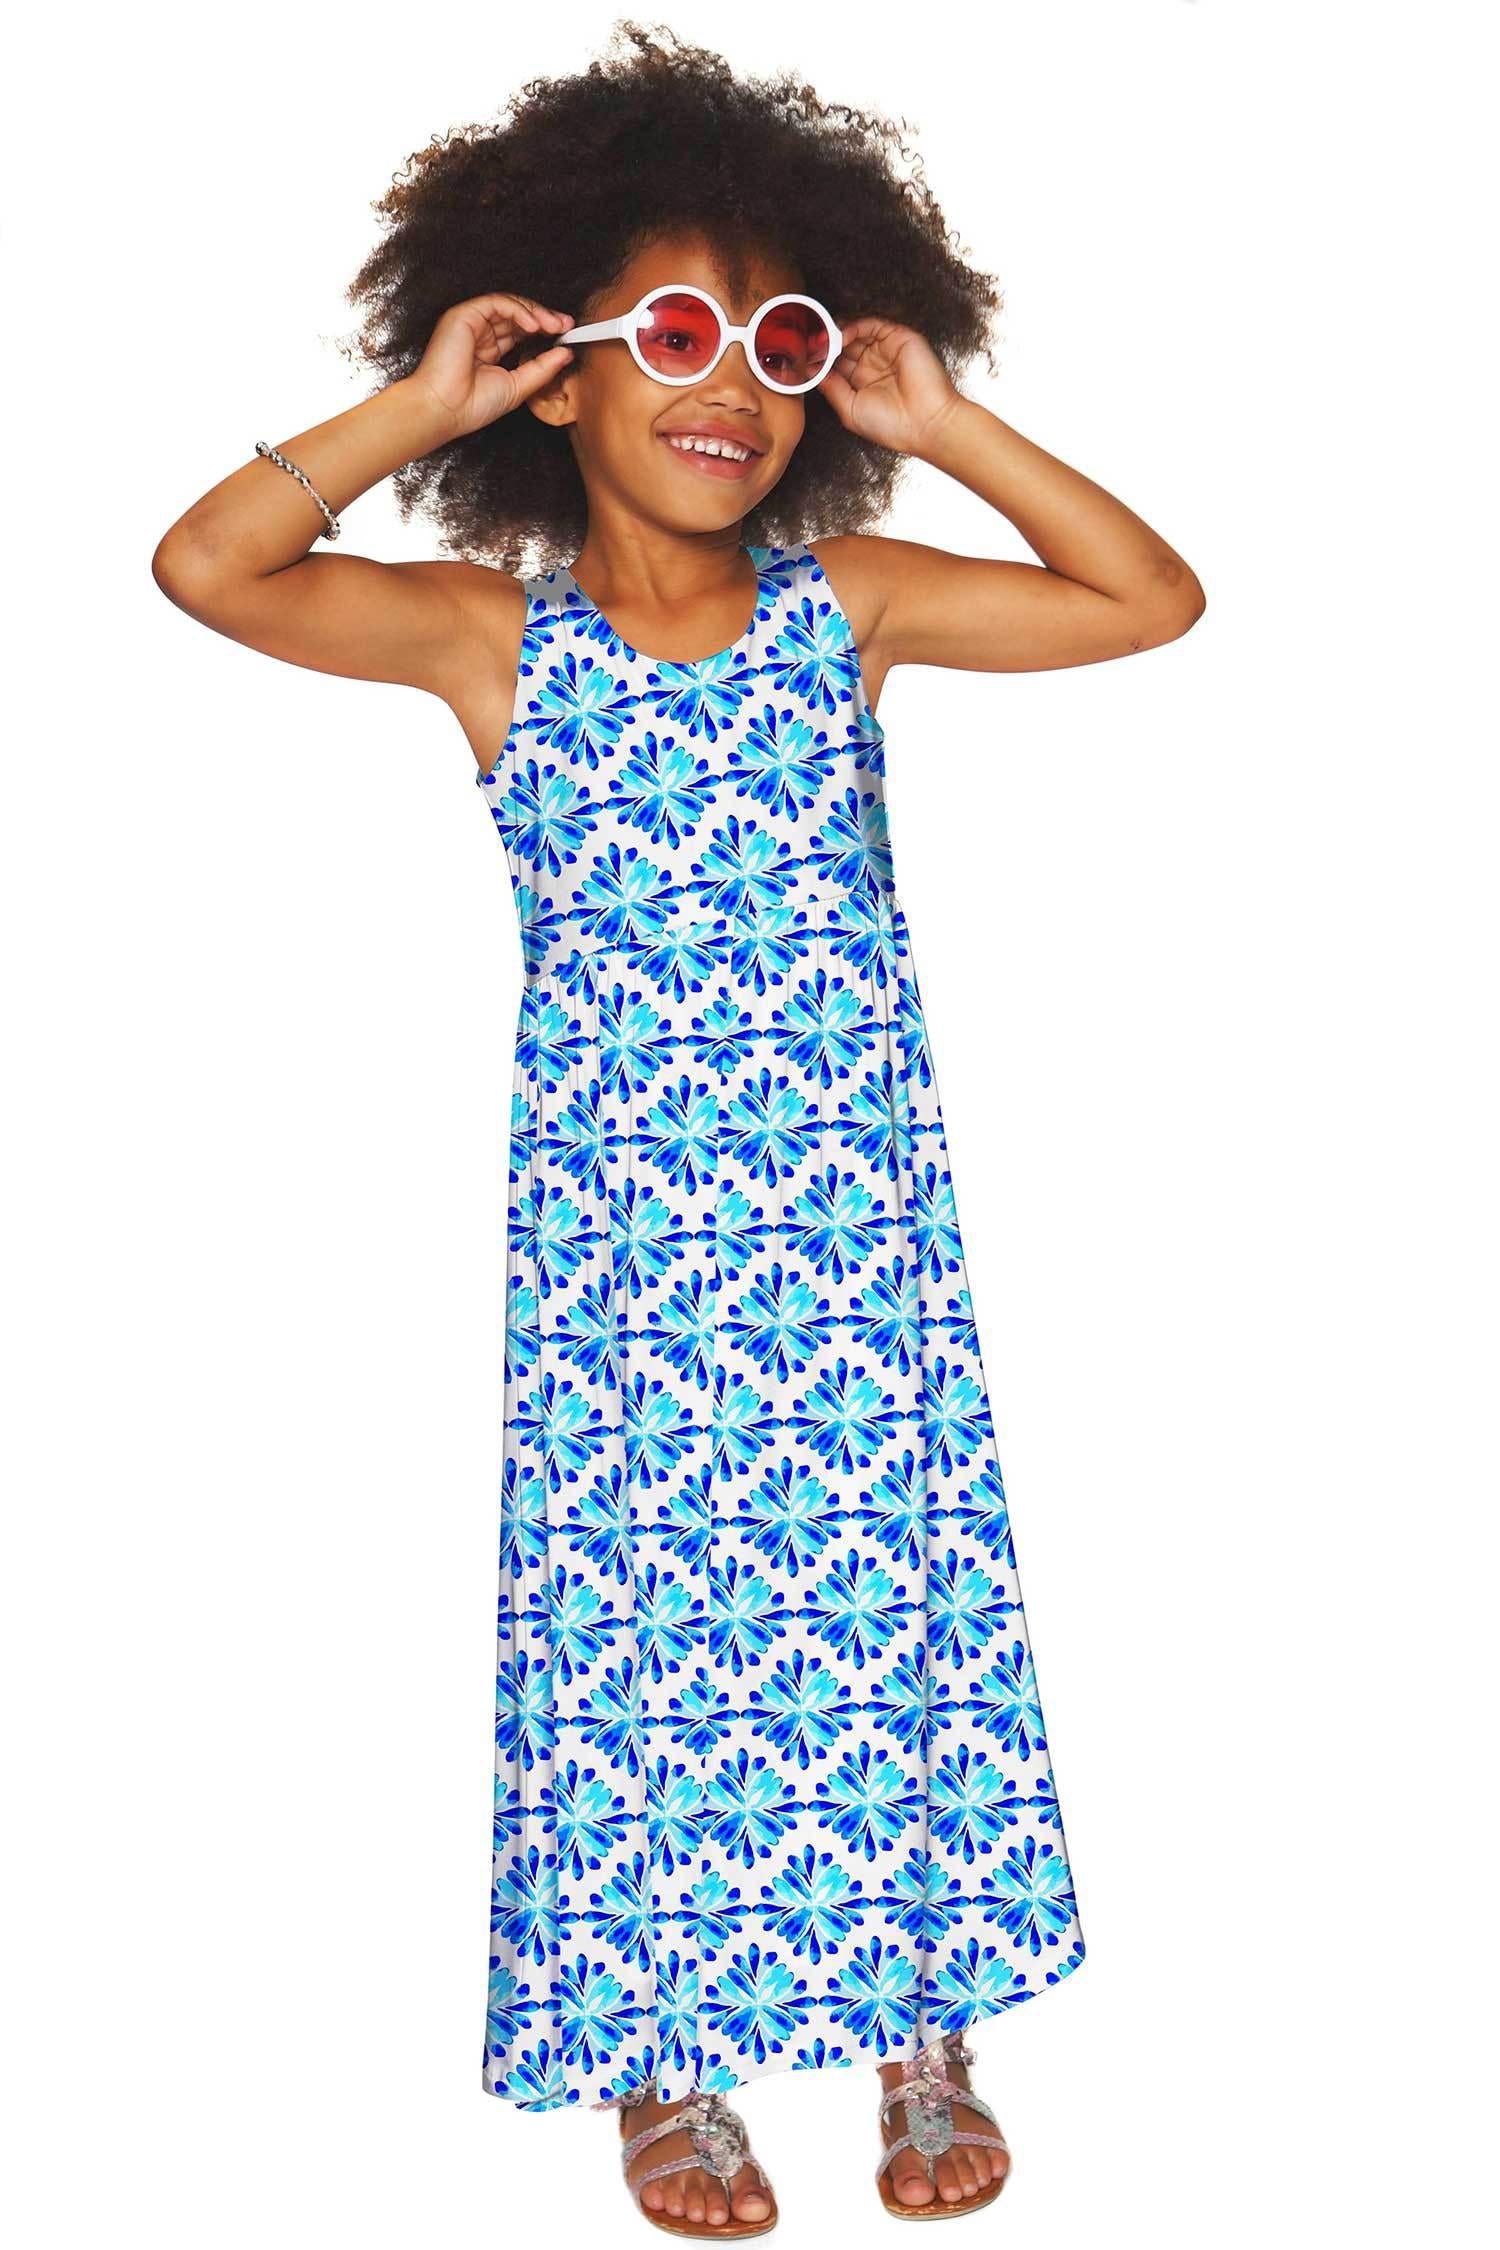 Charisma Bella White & Blue Summer Empire Waist Maxi Dress - Girls - Pineapple Clothing